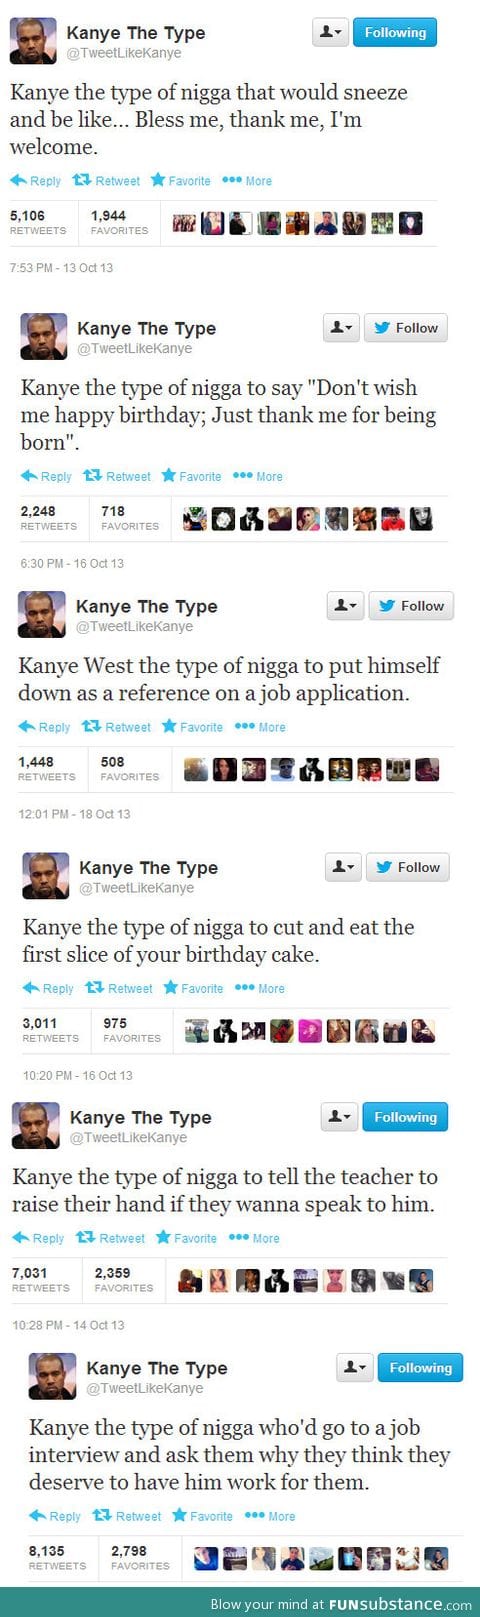 Kanye the Type